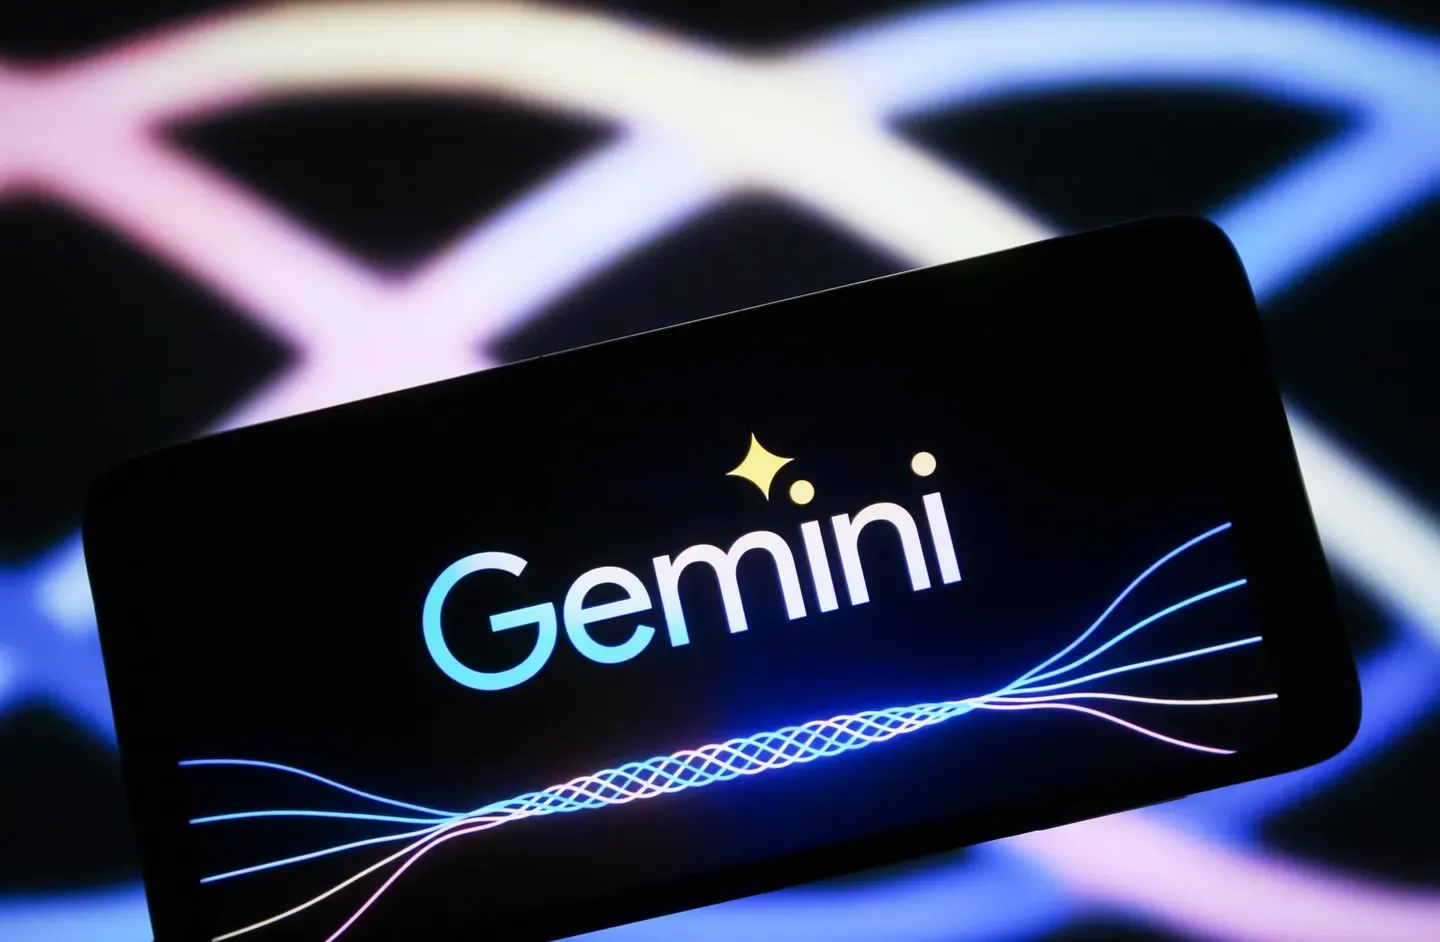 Google's Gemini Takes Center Stage in the AI Arena